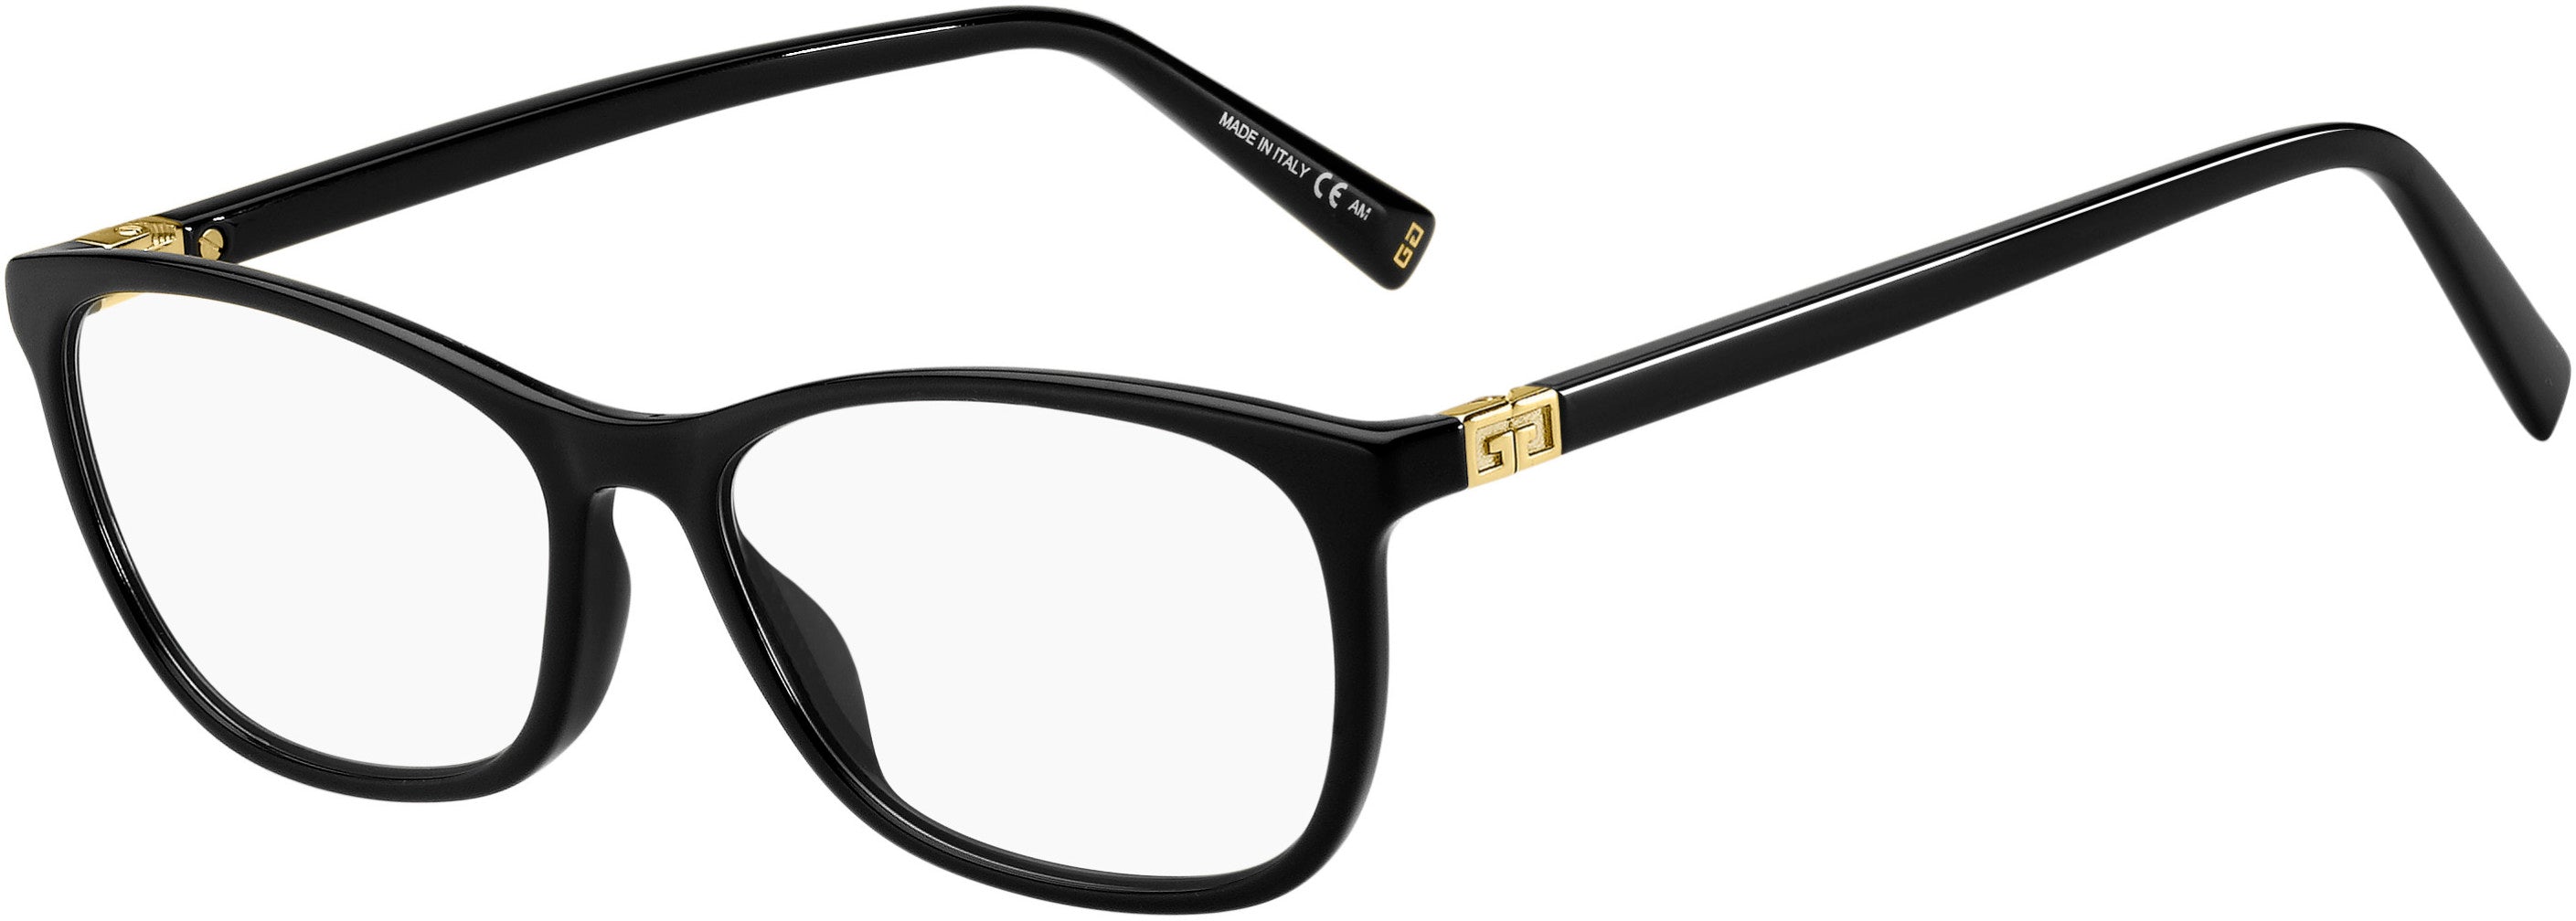  Givenchy 0143 Rectangular Eyeglasses 0807-0807  Black (00 Demo Lens)